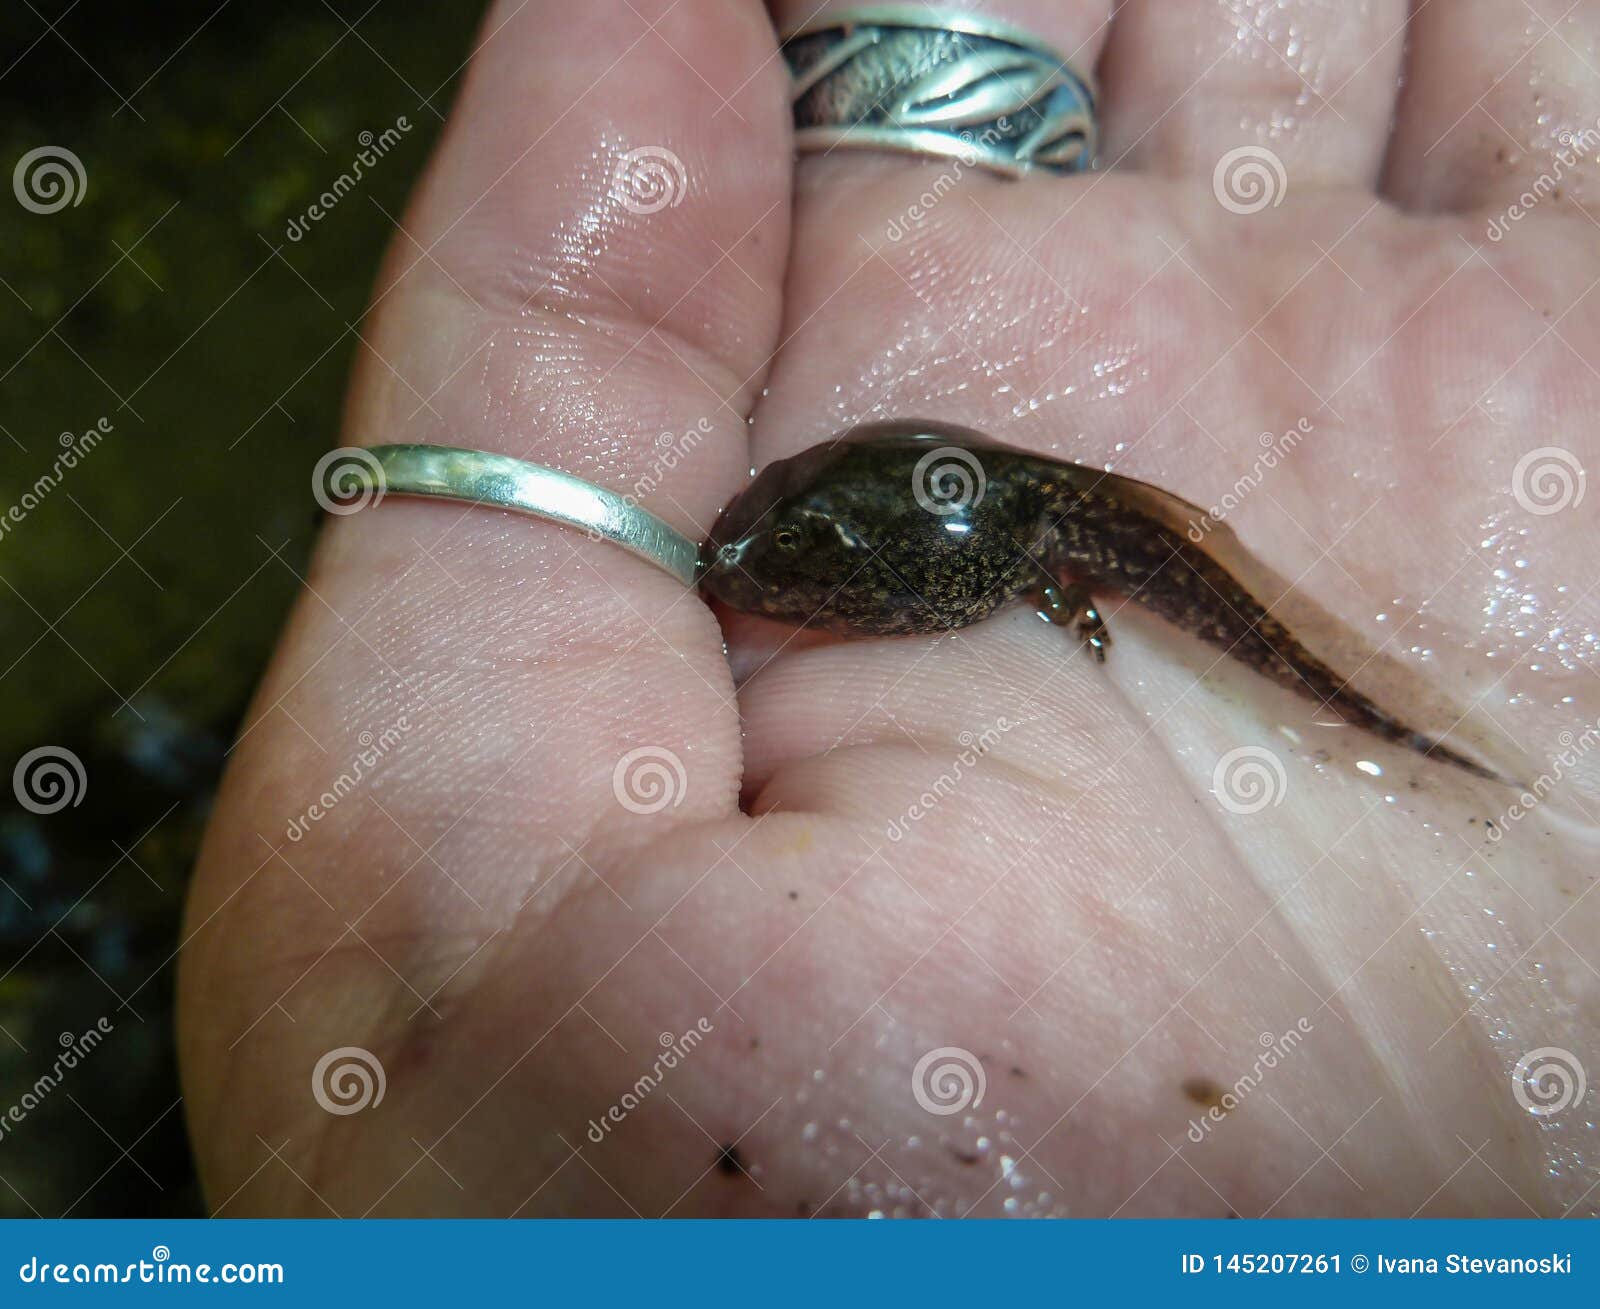 https://thumbs.dreamstime.com/z/tadpole-small-legs-hand-tadpole-small-legs-tail-hand-found-river-milesevka-southwestern-145207261.jpg